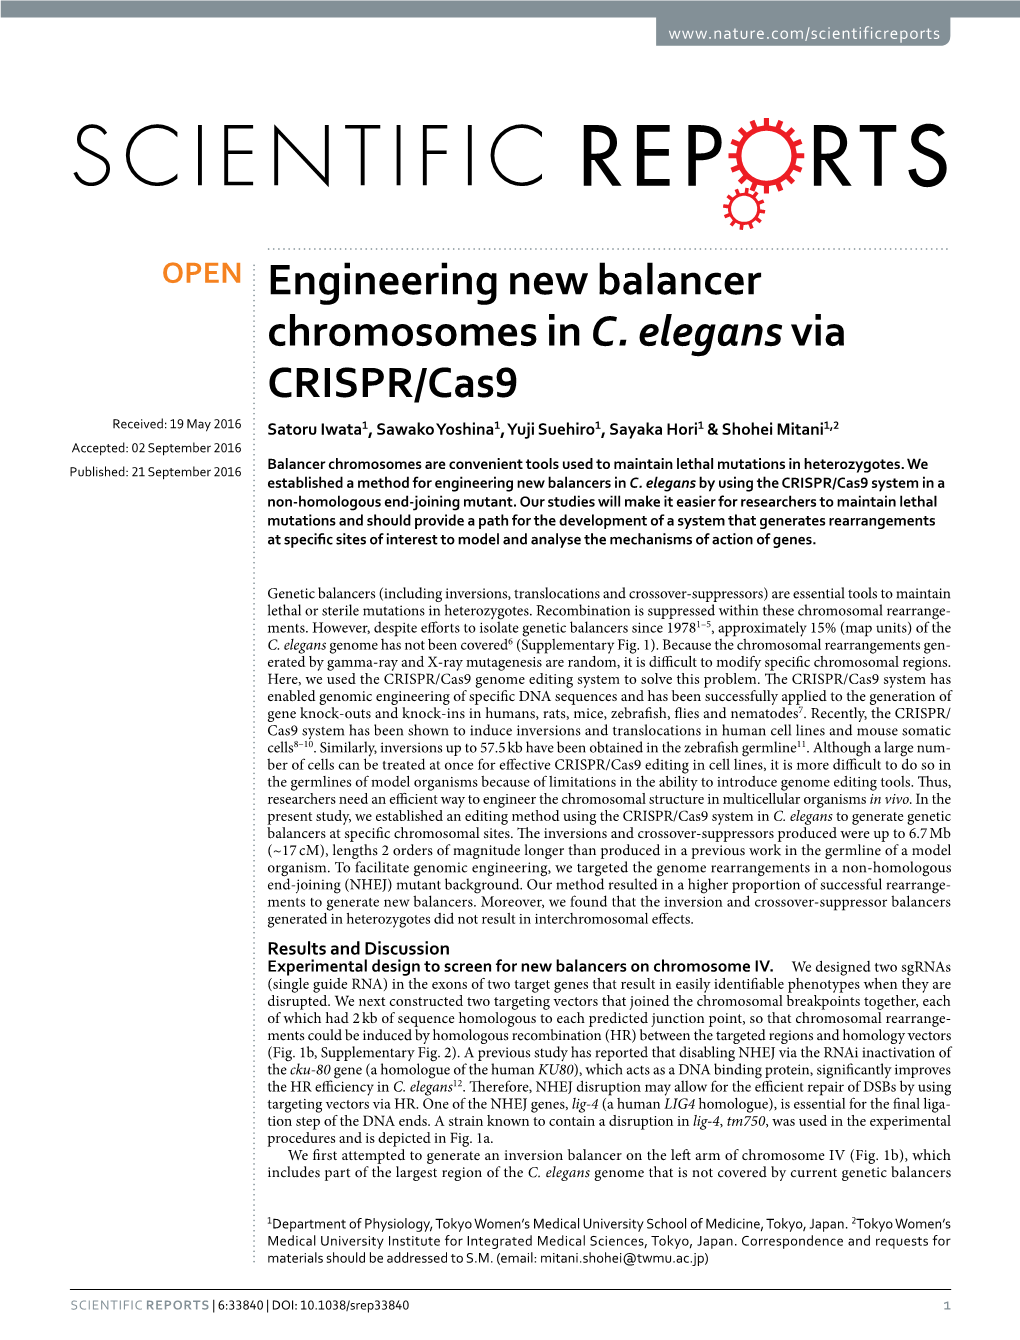 Engineering New Balancer Chromosomes in C. Elegans Via